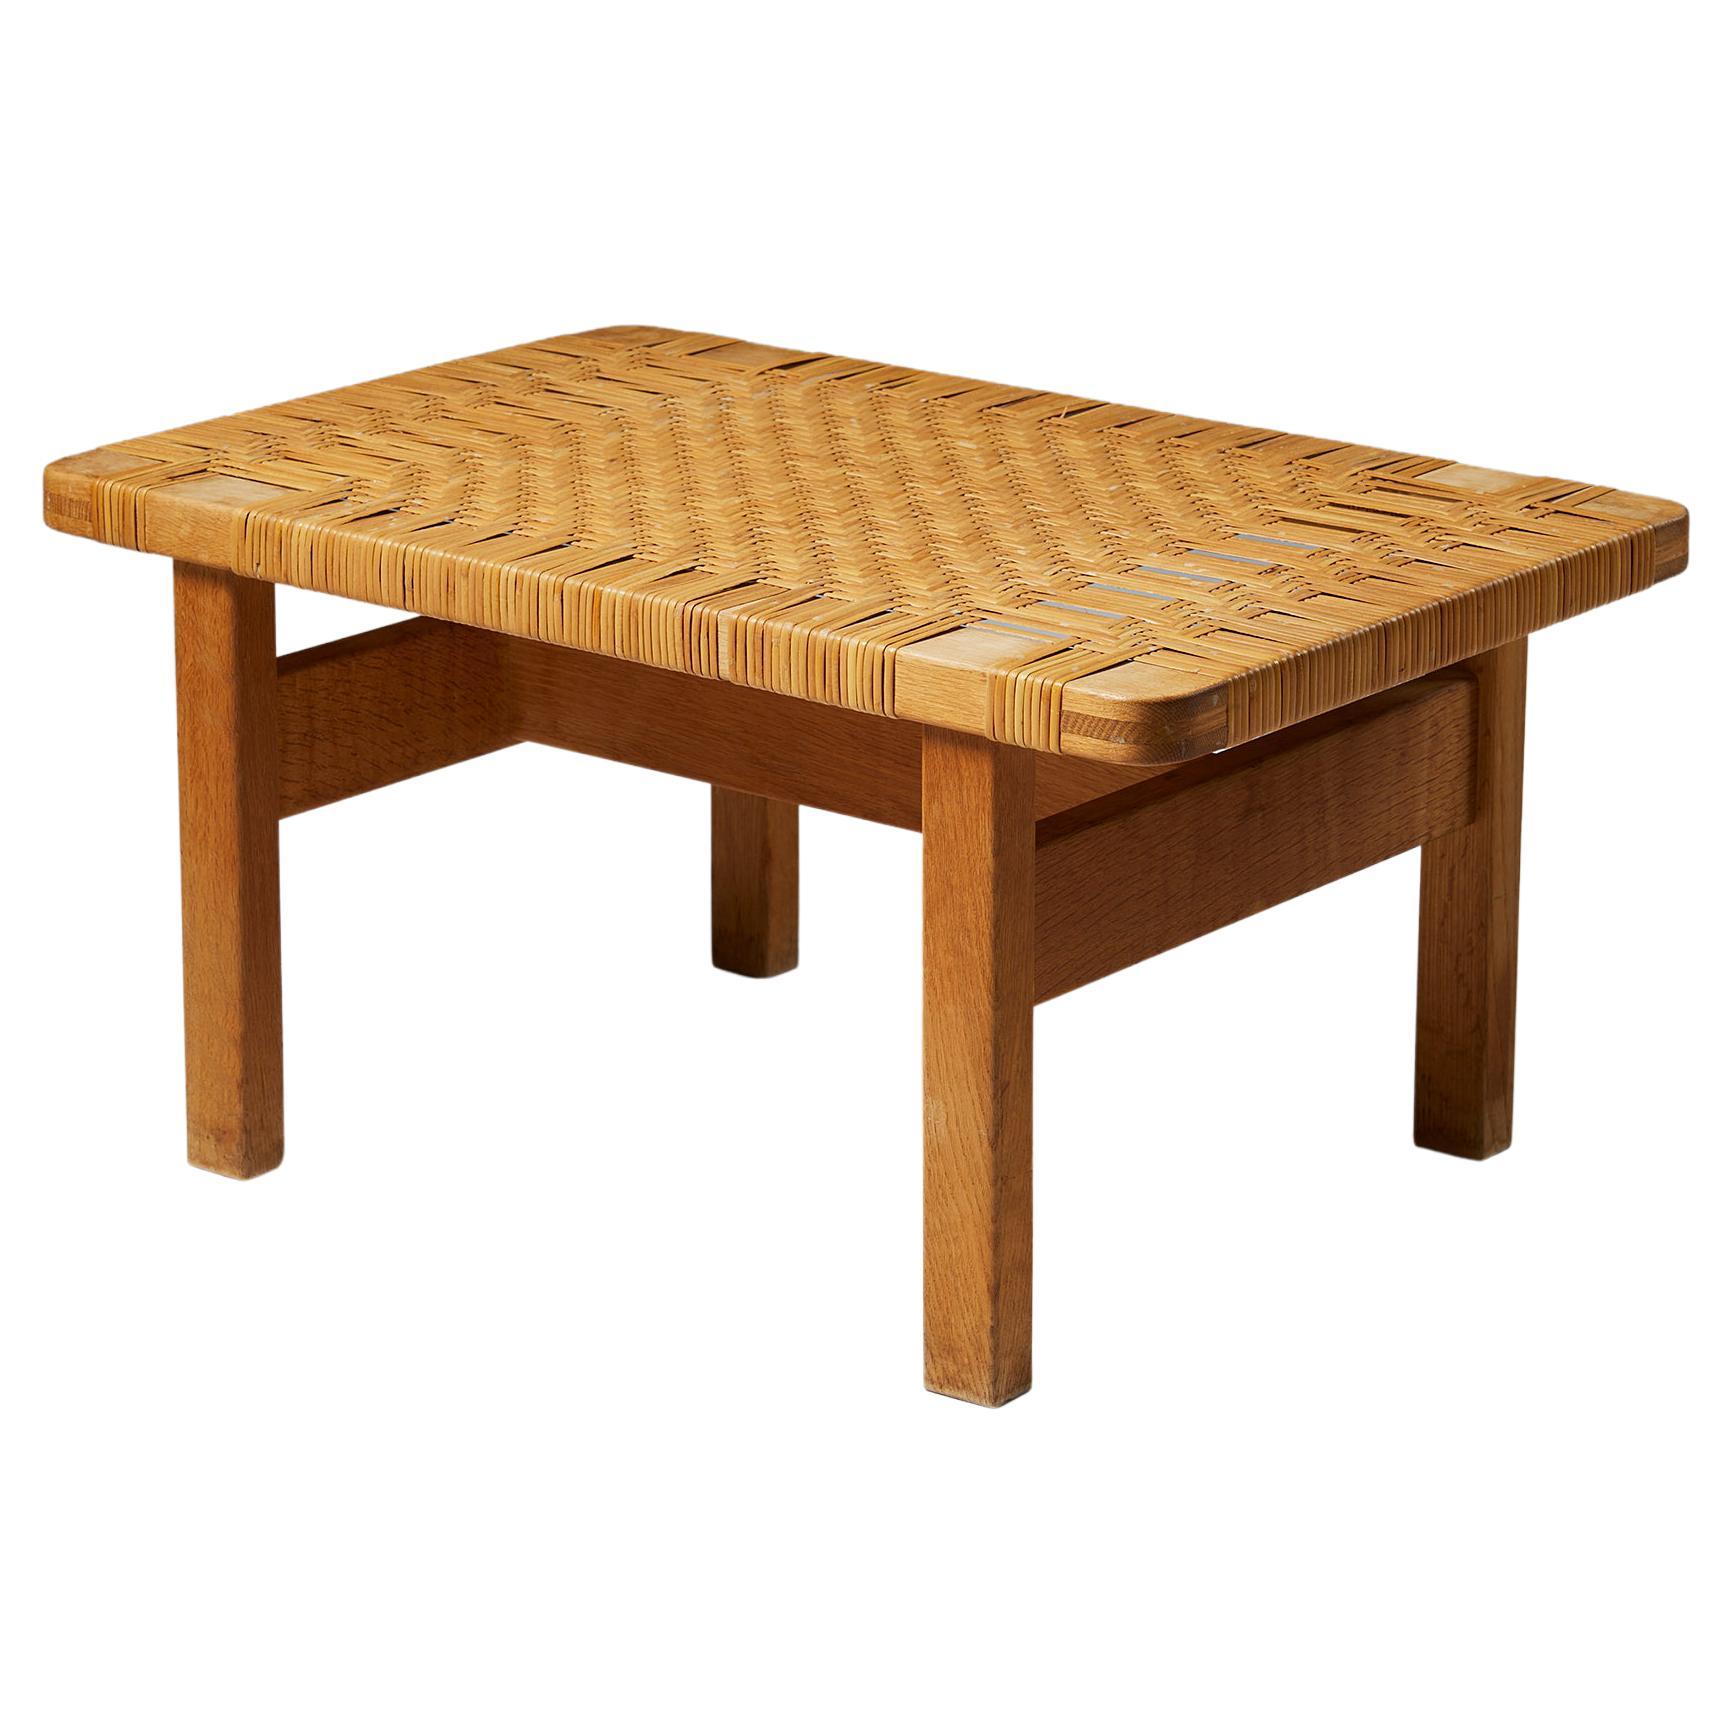 Occasional table/ Bench model 5273, designed by Börge Mogensen for Fredericia Stolefabrik,

Denmark. 1950's.

Oak and cane.